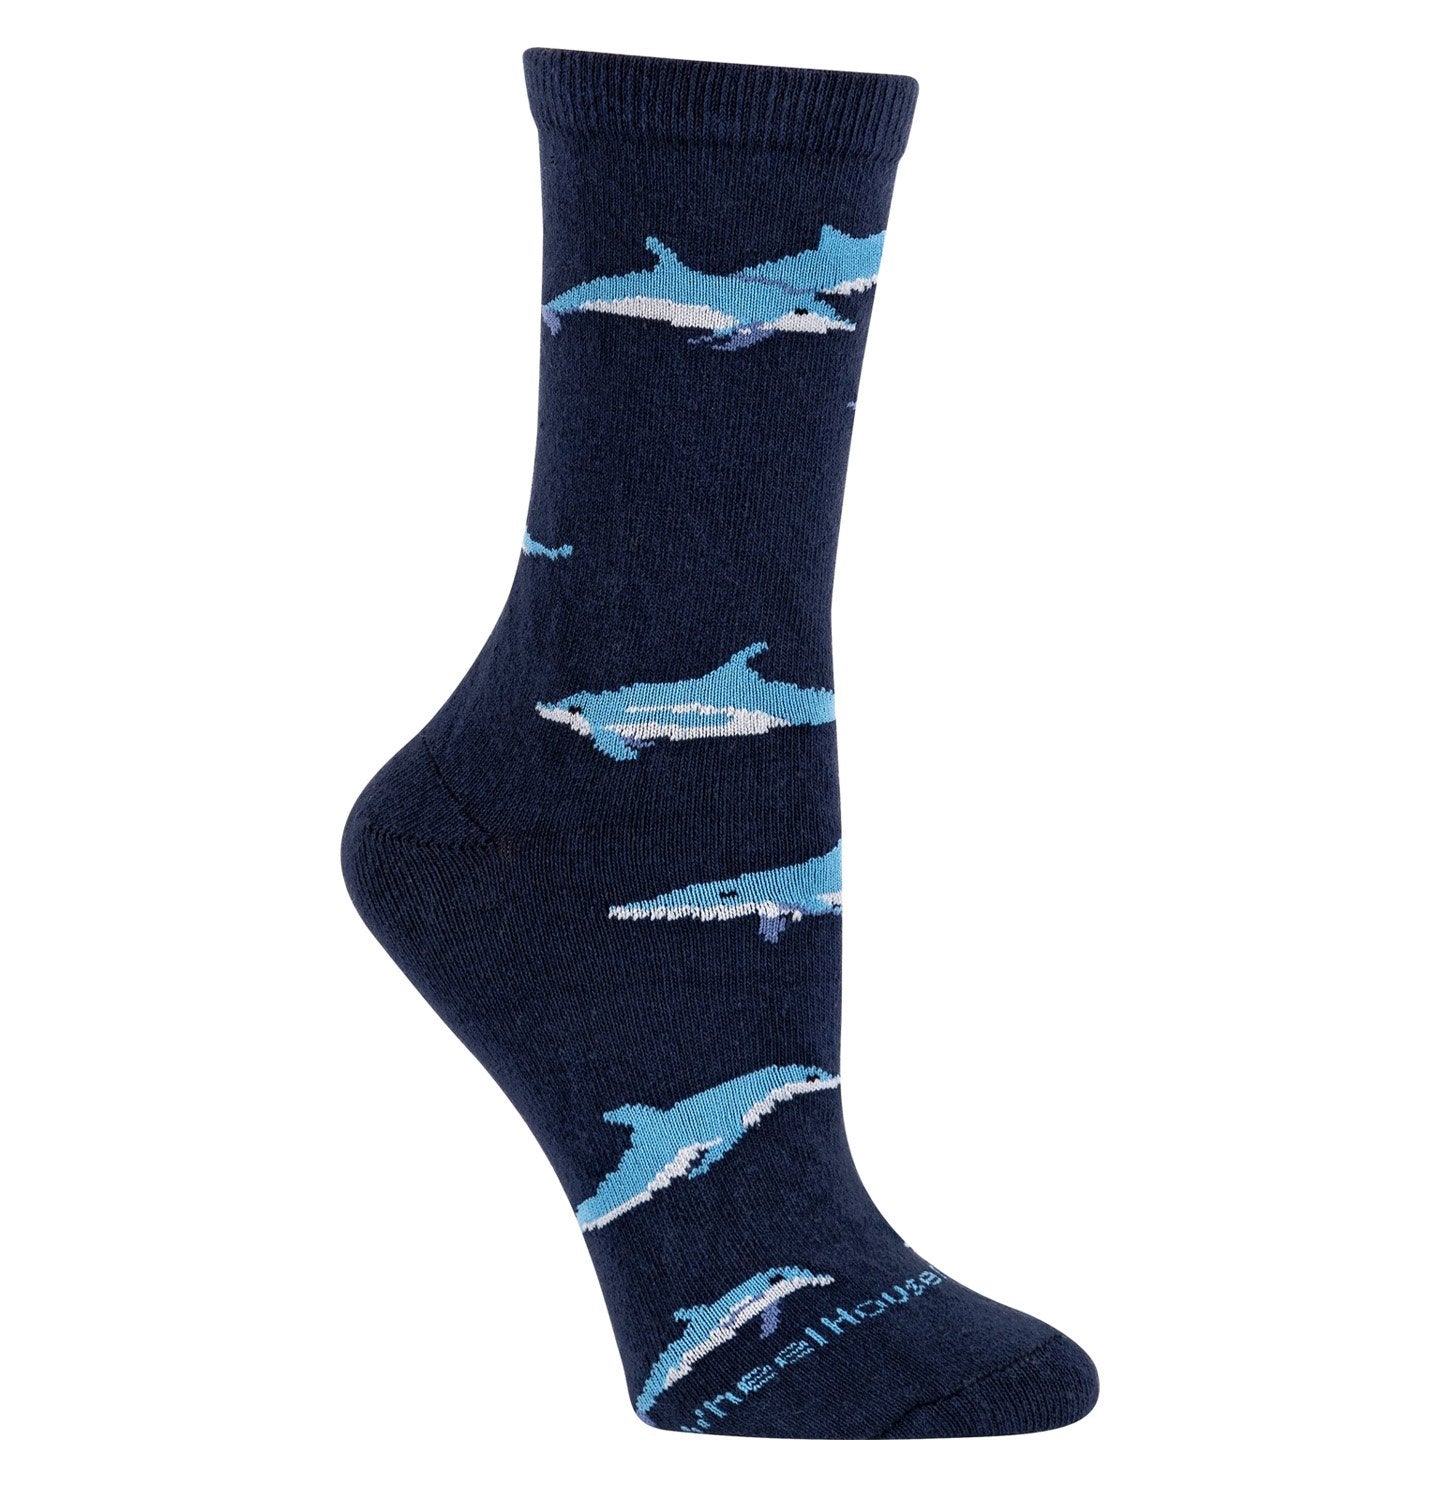 Animal Pride - Dolphins on Navy - Adult Cotton Crew Socks